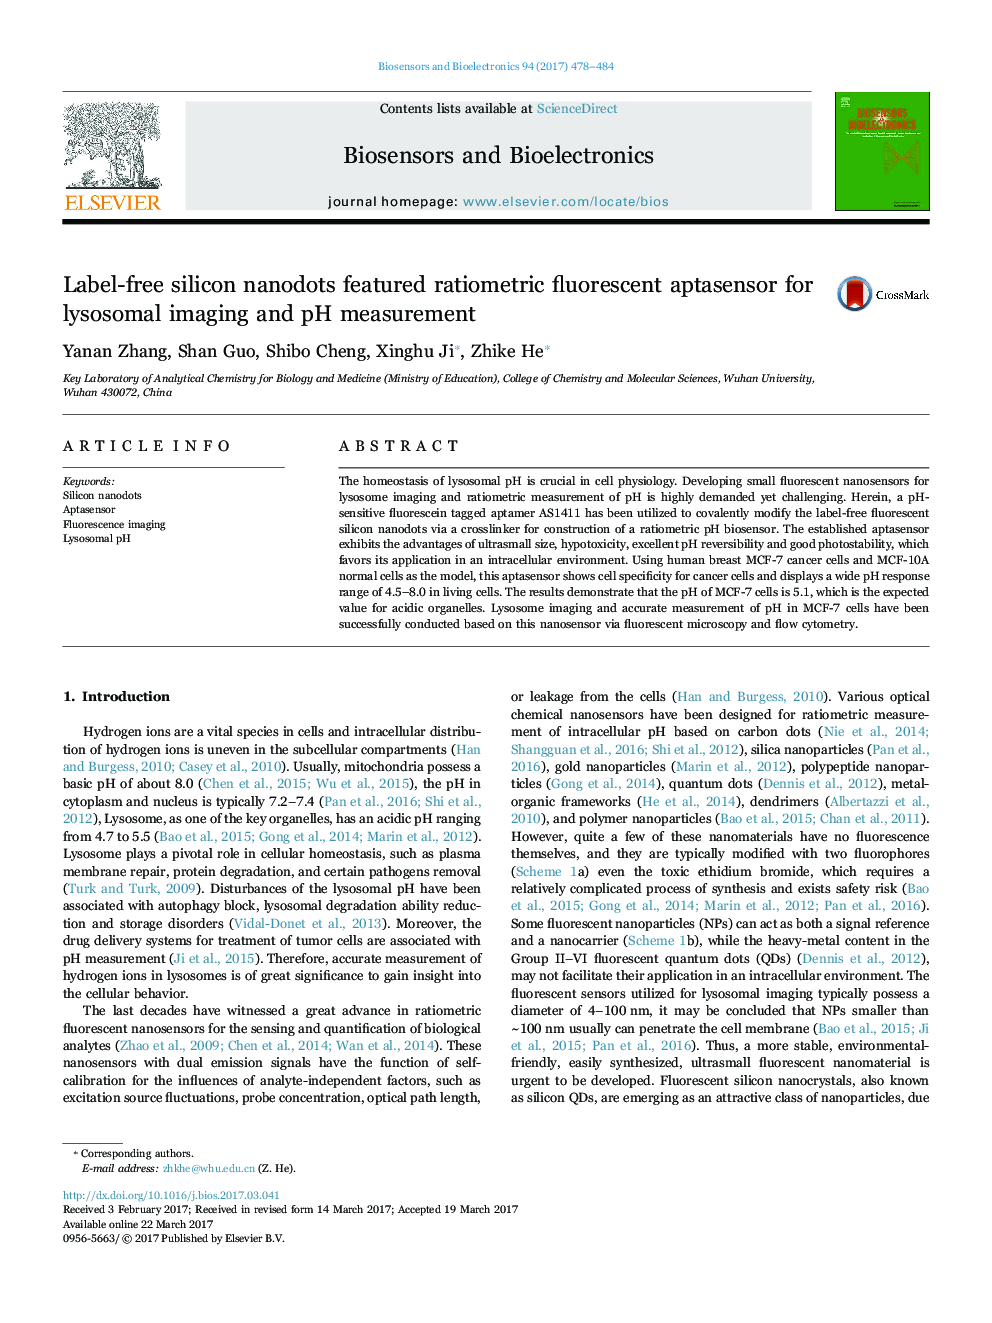 Label-free silicon nanodots featured ratiometric fluorescent aptasensor for lysosomal imaging and pH measurement